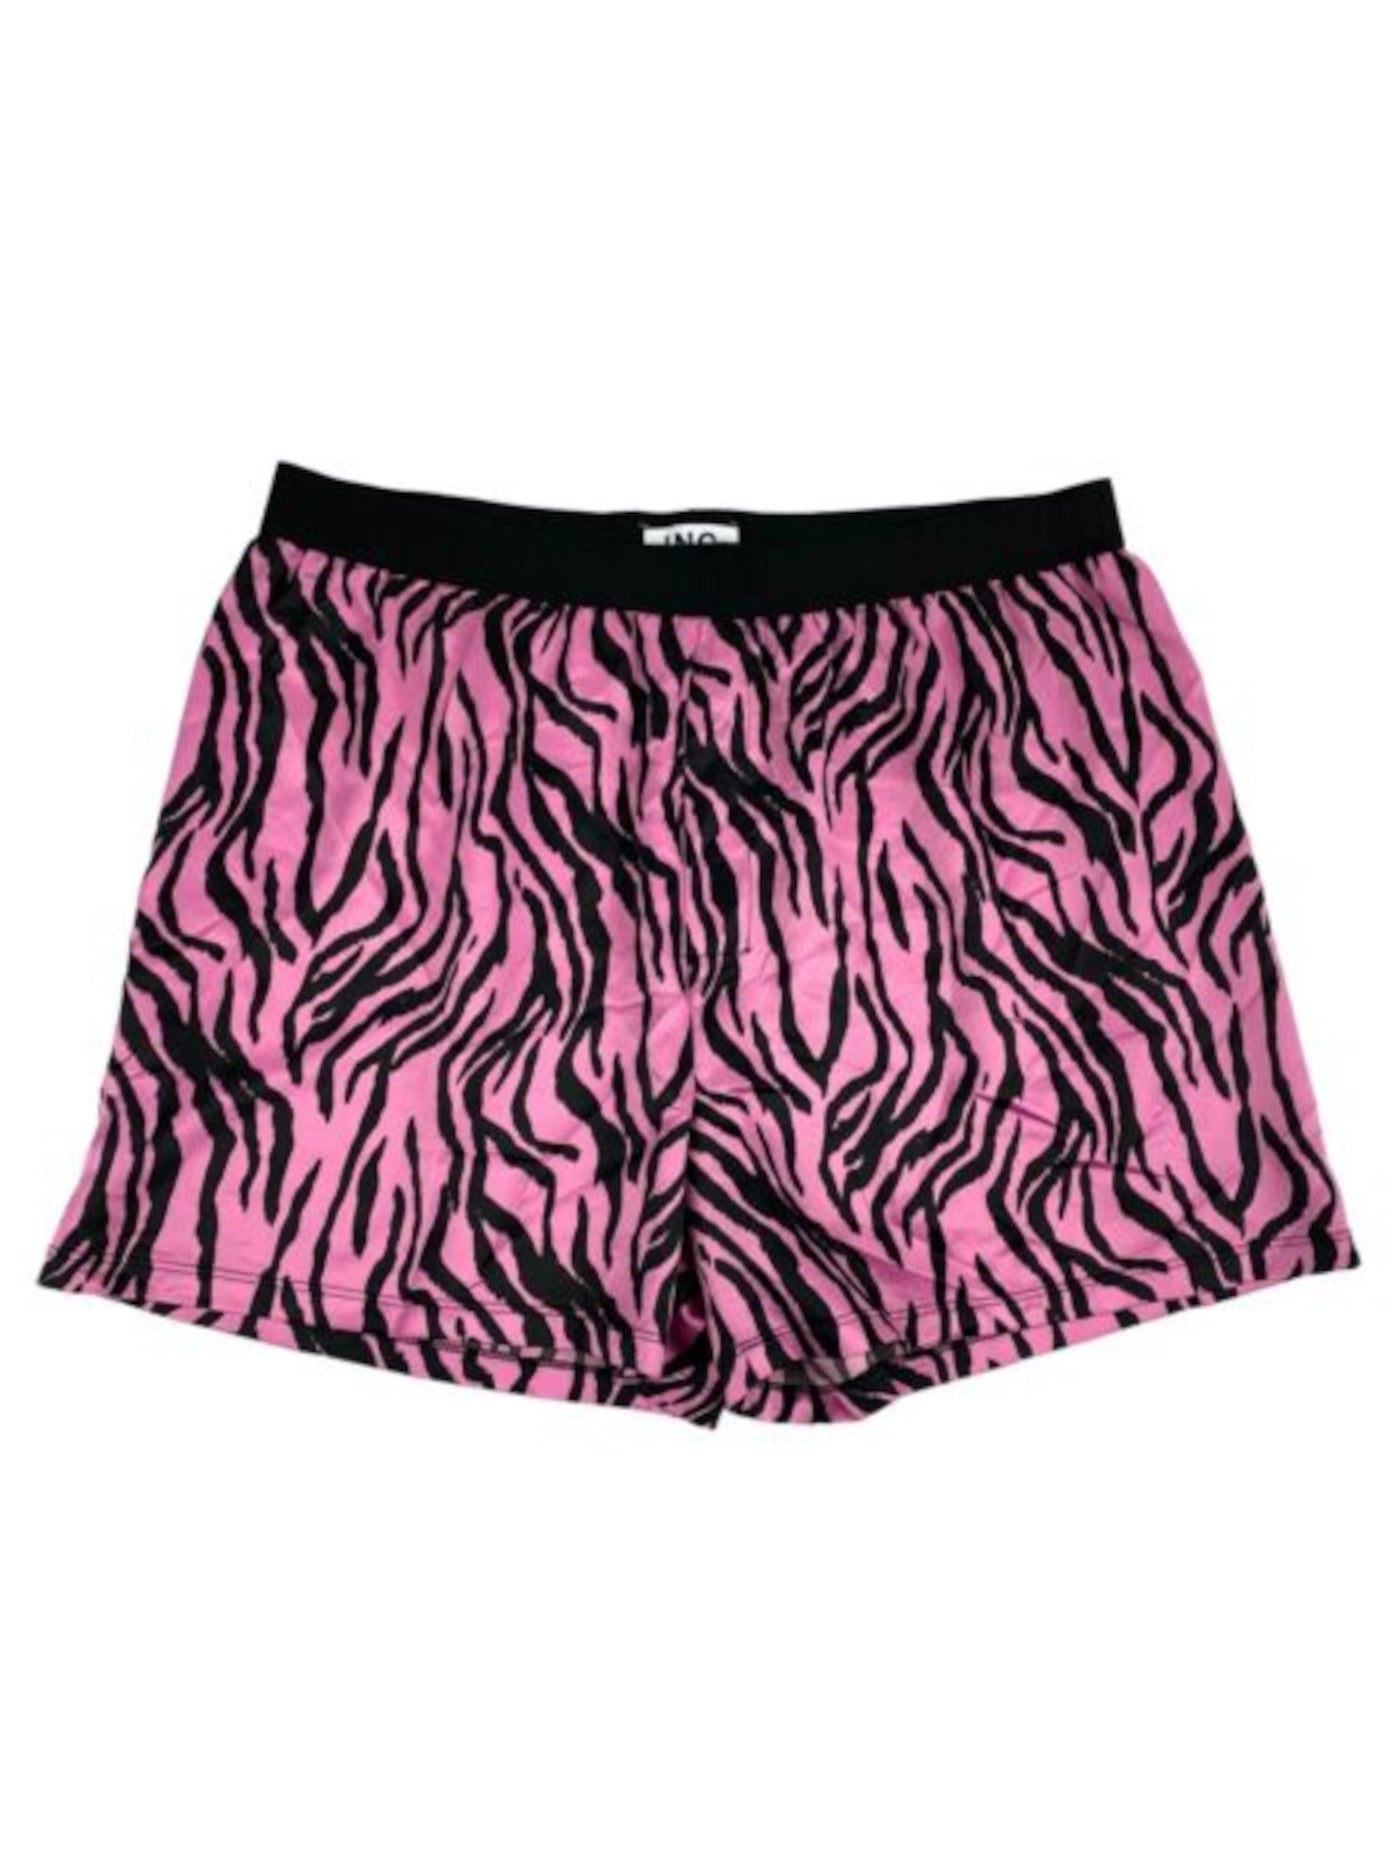 INC Intimates Pink Animal Print Boy Short Underwear L